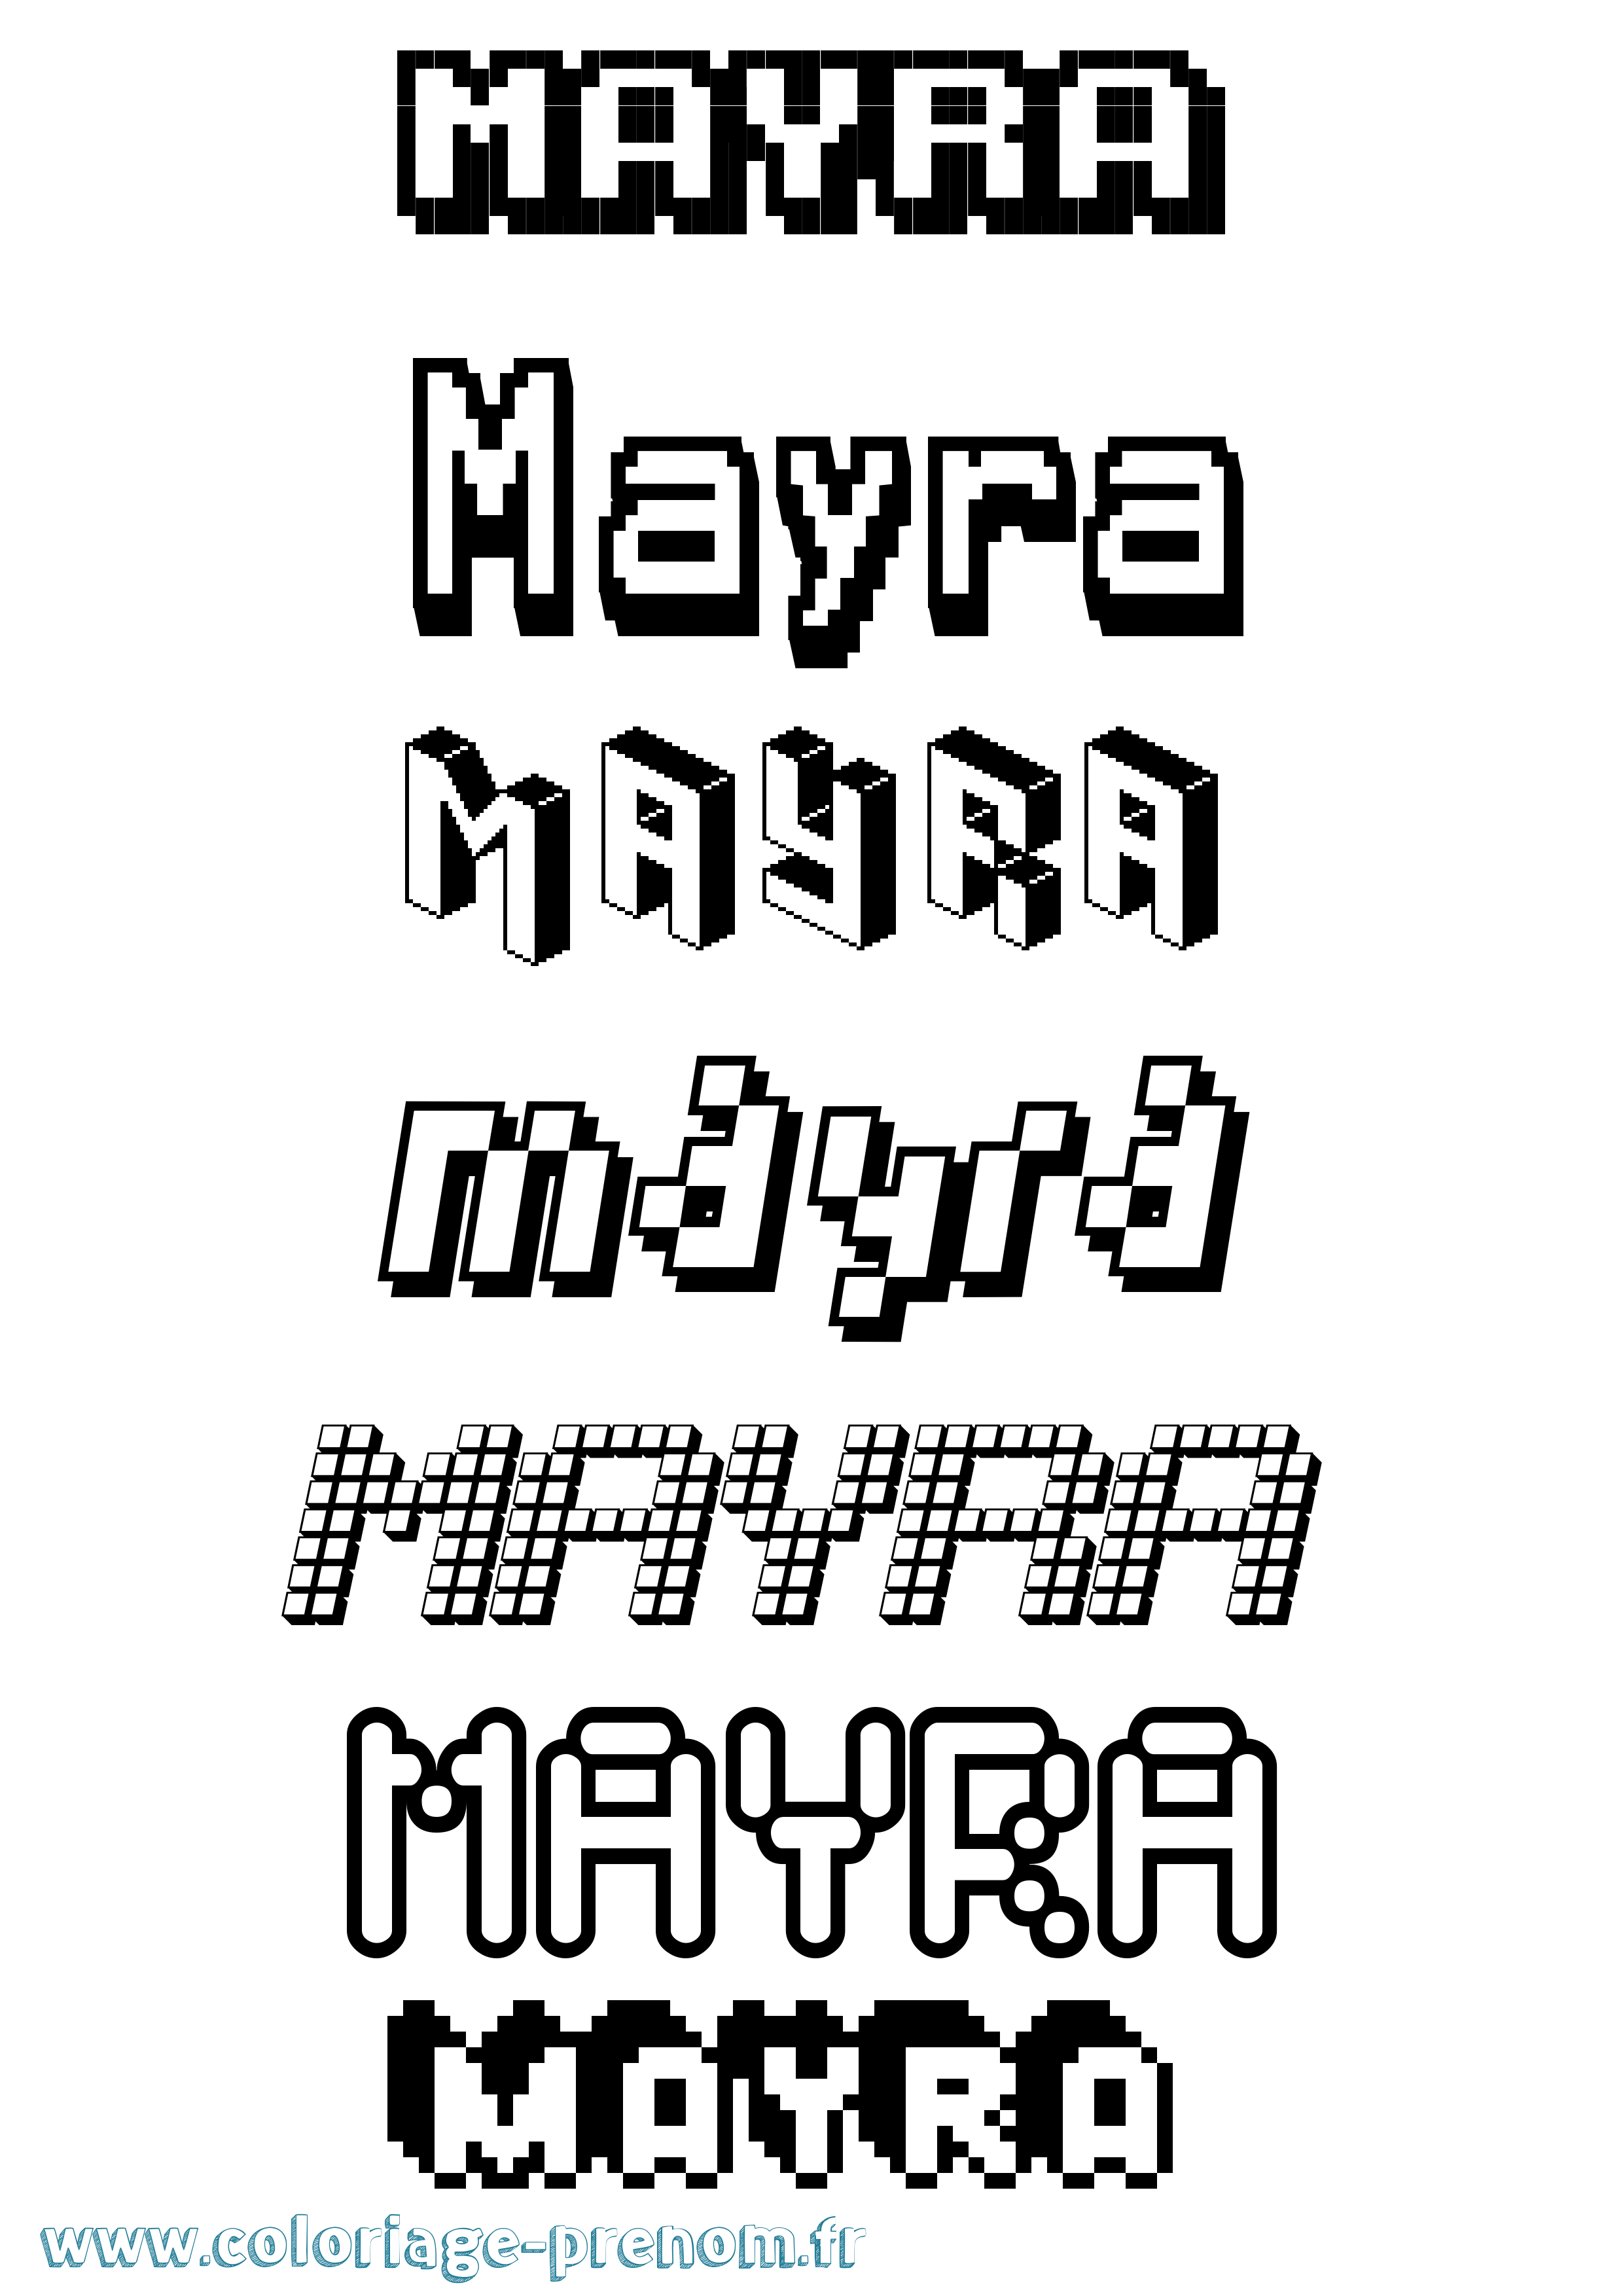 Coloriage prénom Mayra Pixel